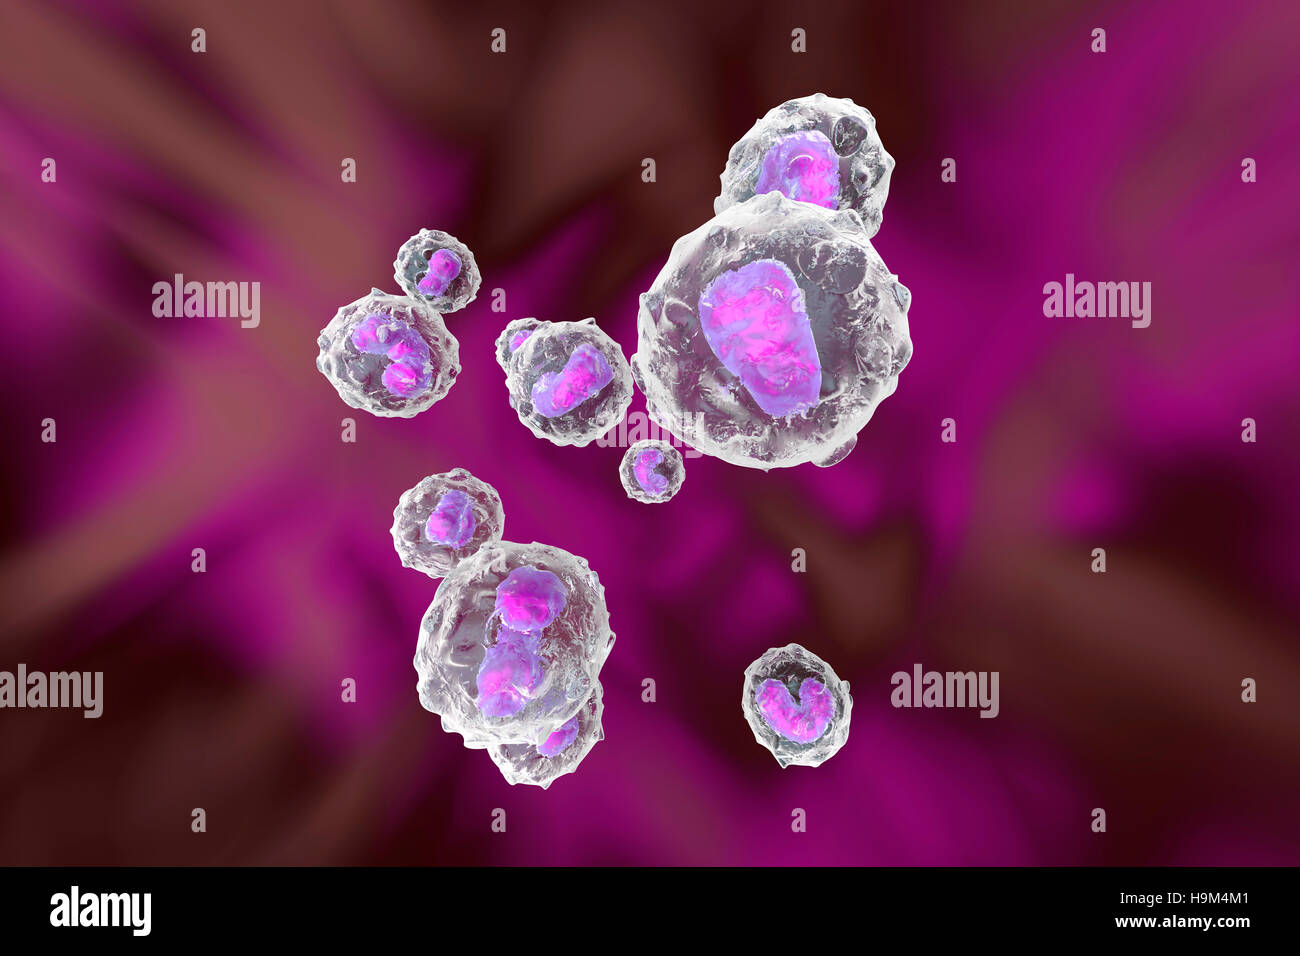 Monocyte immune system defense cells, 3D Rendering Stock Photo